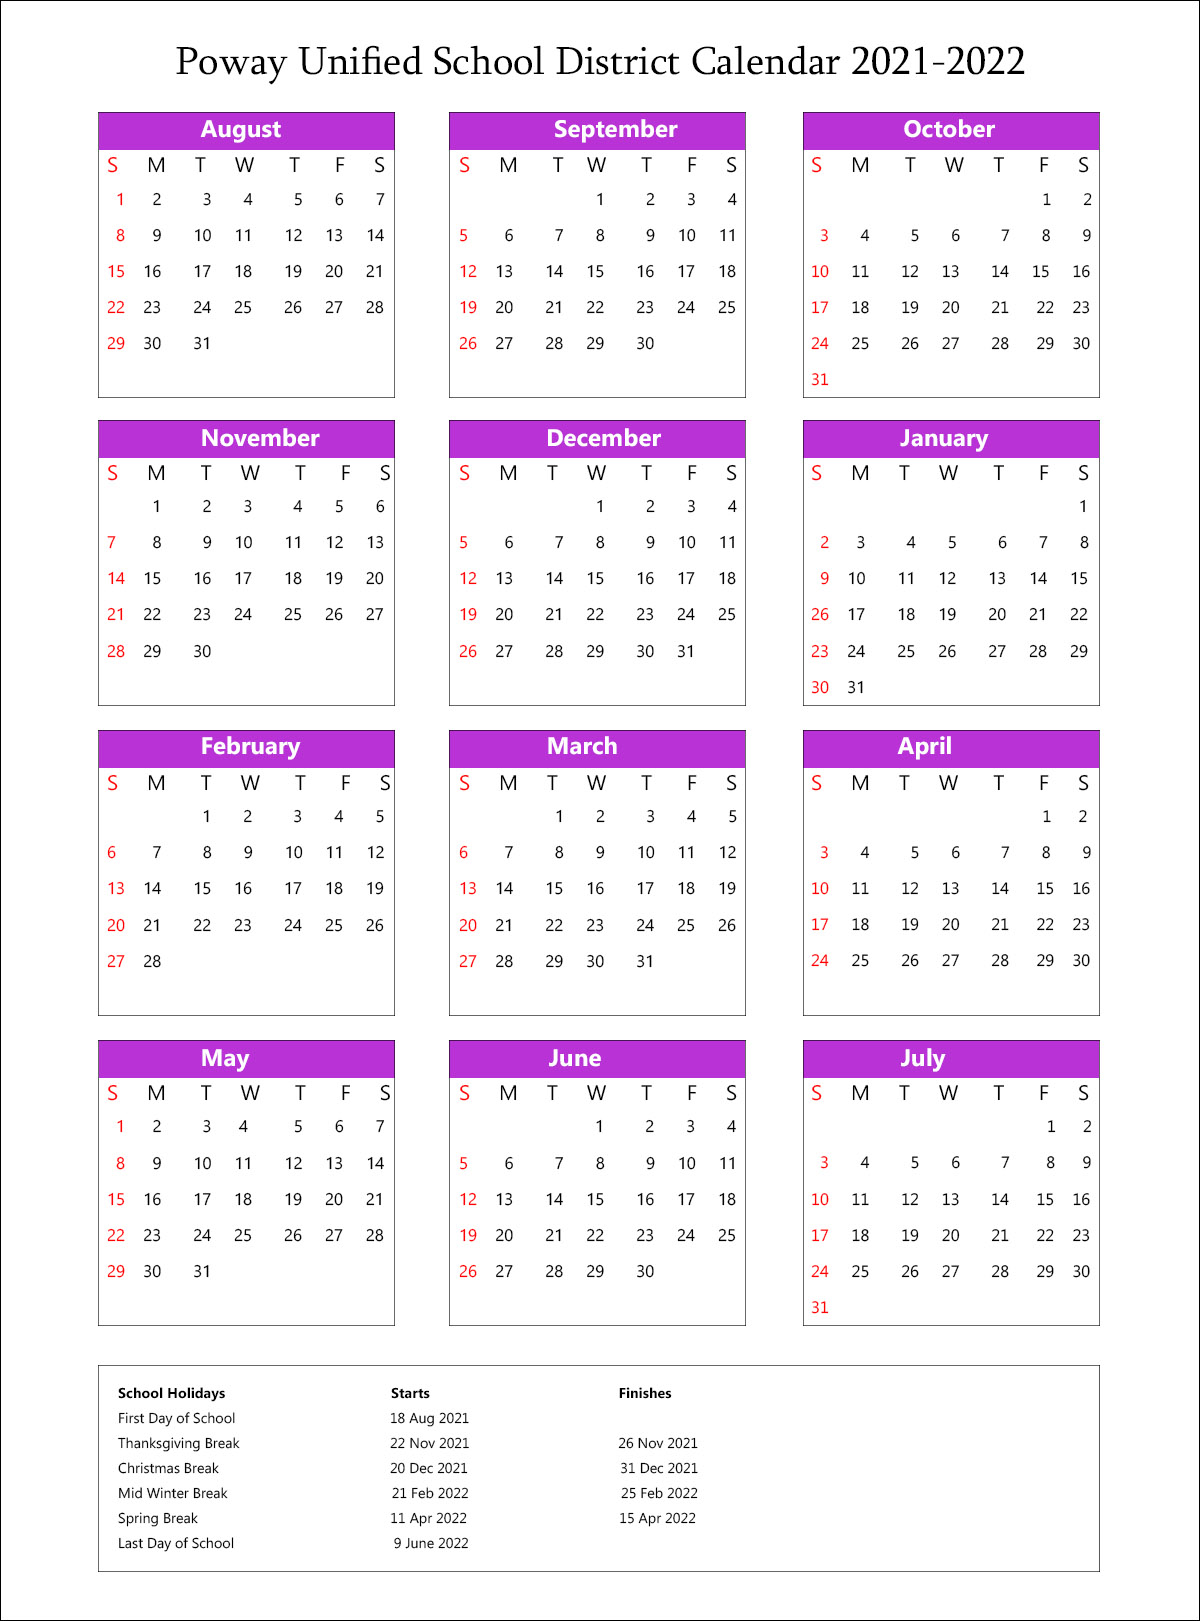 Poway Usd Calendar 2022 Poway Unified School District Calendar Holidays 2021-2022